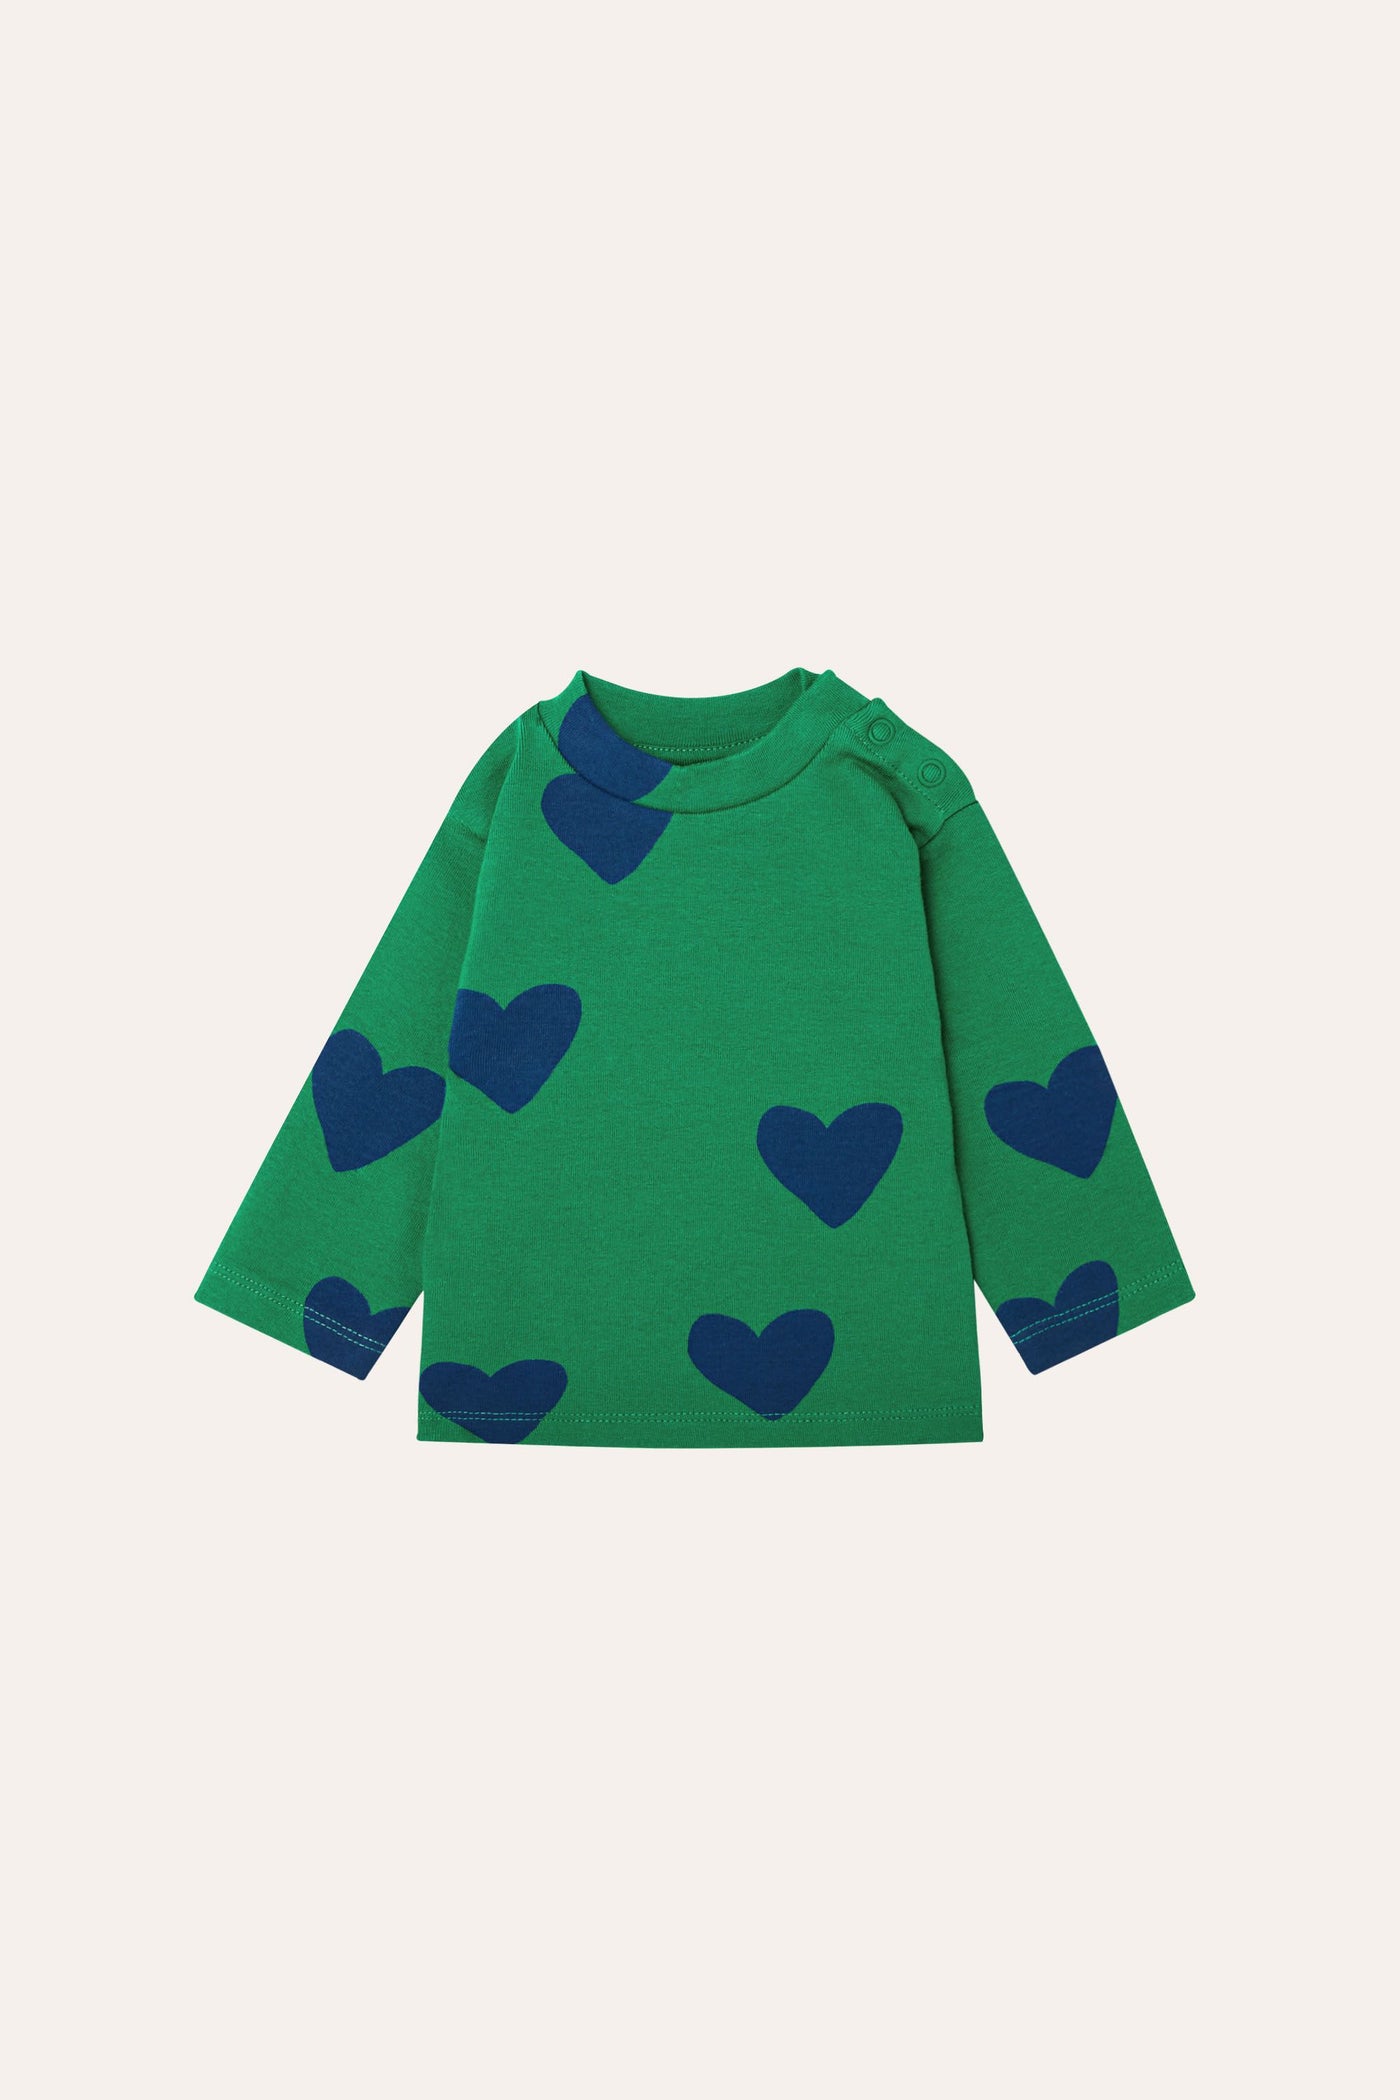 The Campamento hearts long-sleeved baby t-shirt